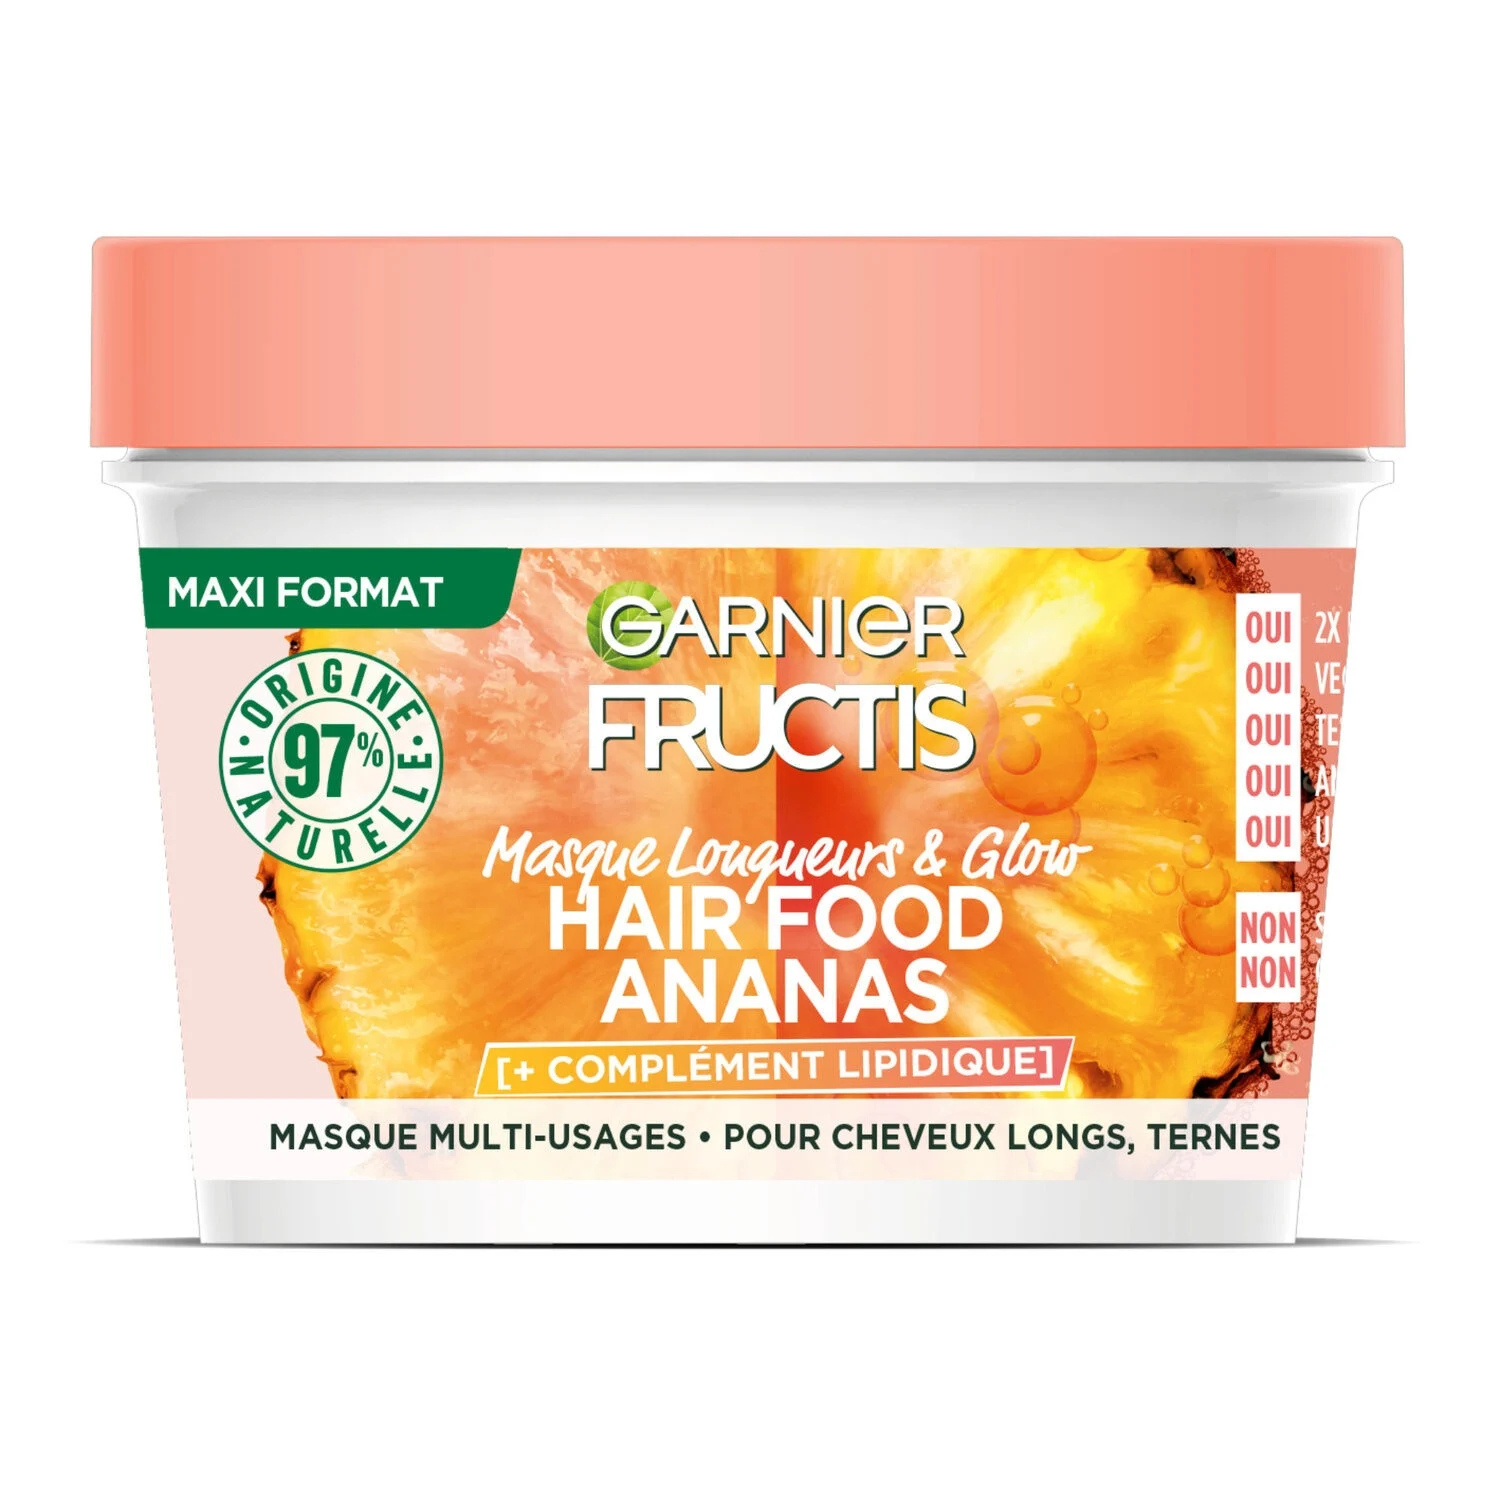 Masque Capillaire Longueurs et Glow Multi-Usages Hair Food Ananas Fructis, 400ml - GARNIER